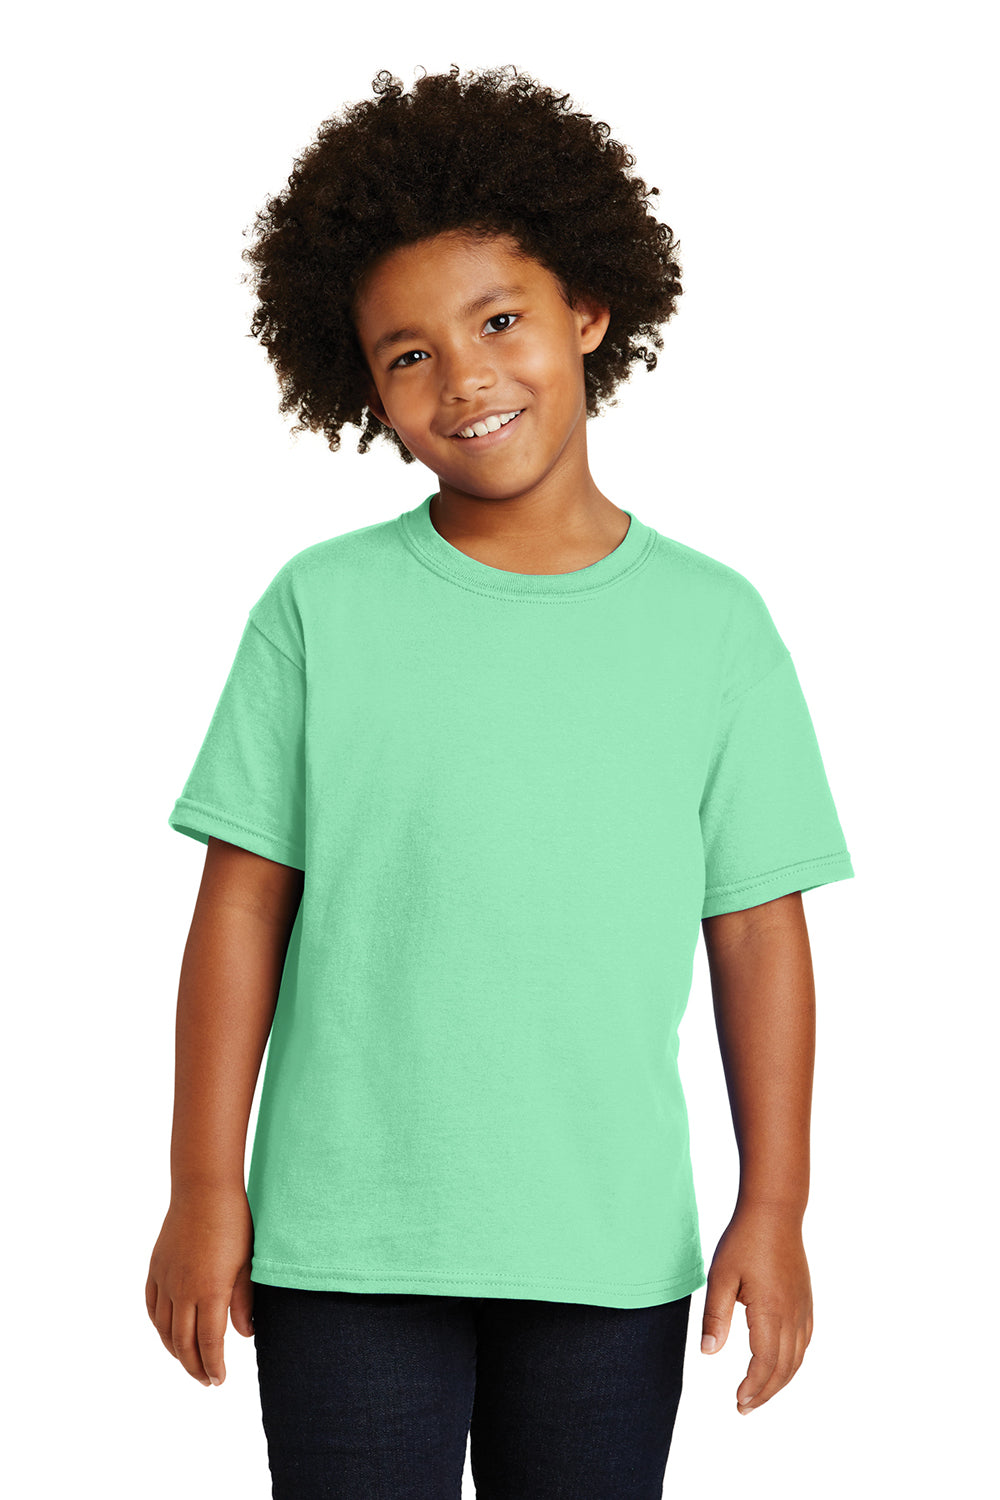 Gildan 5000B/G500B Youth Short Sleeve Crewneck T-Shirt Mint Green Front